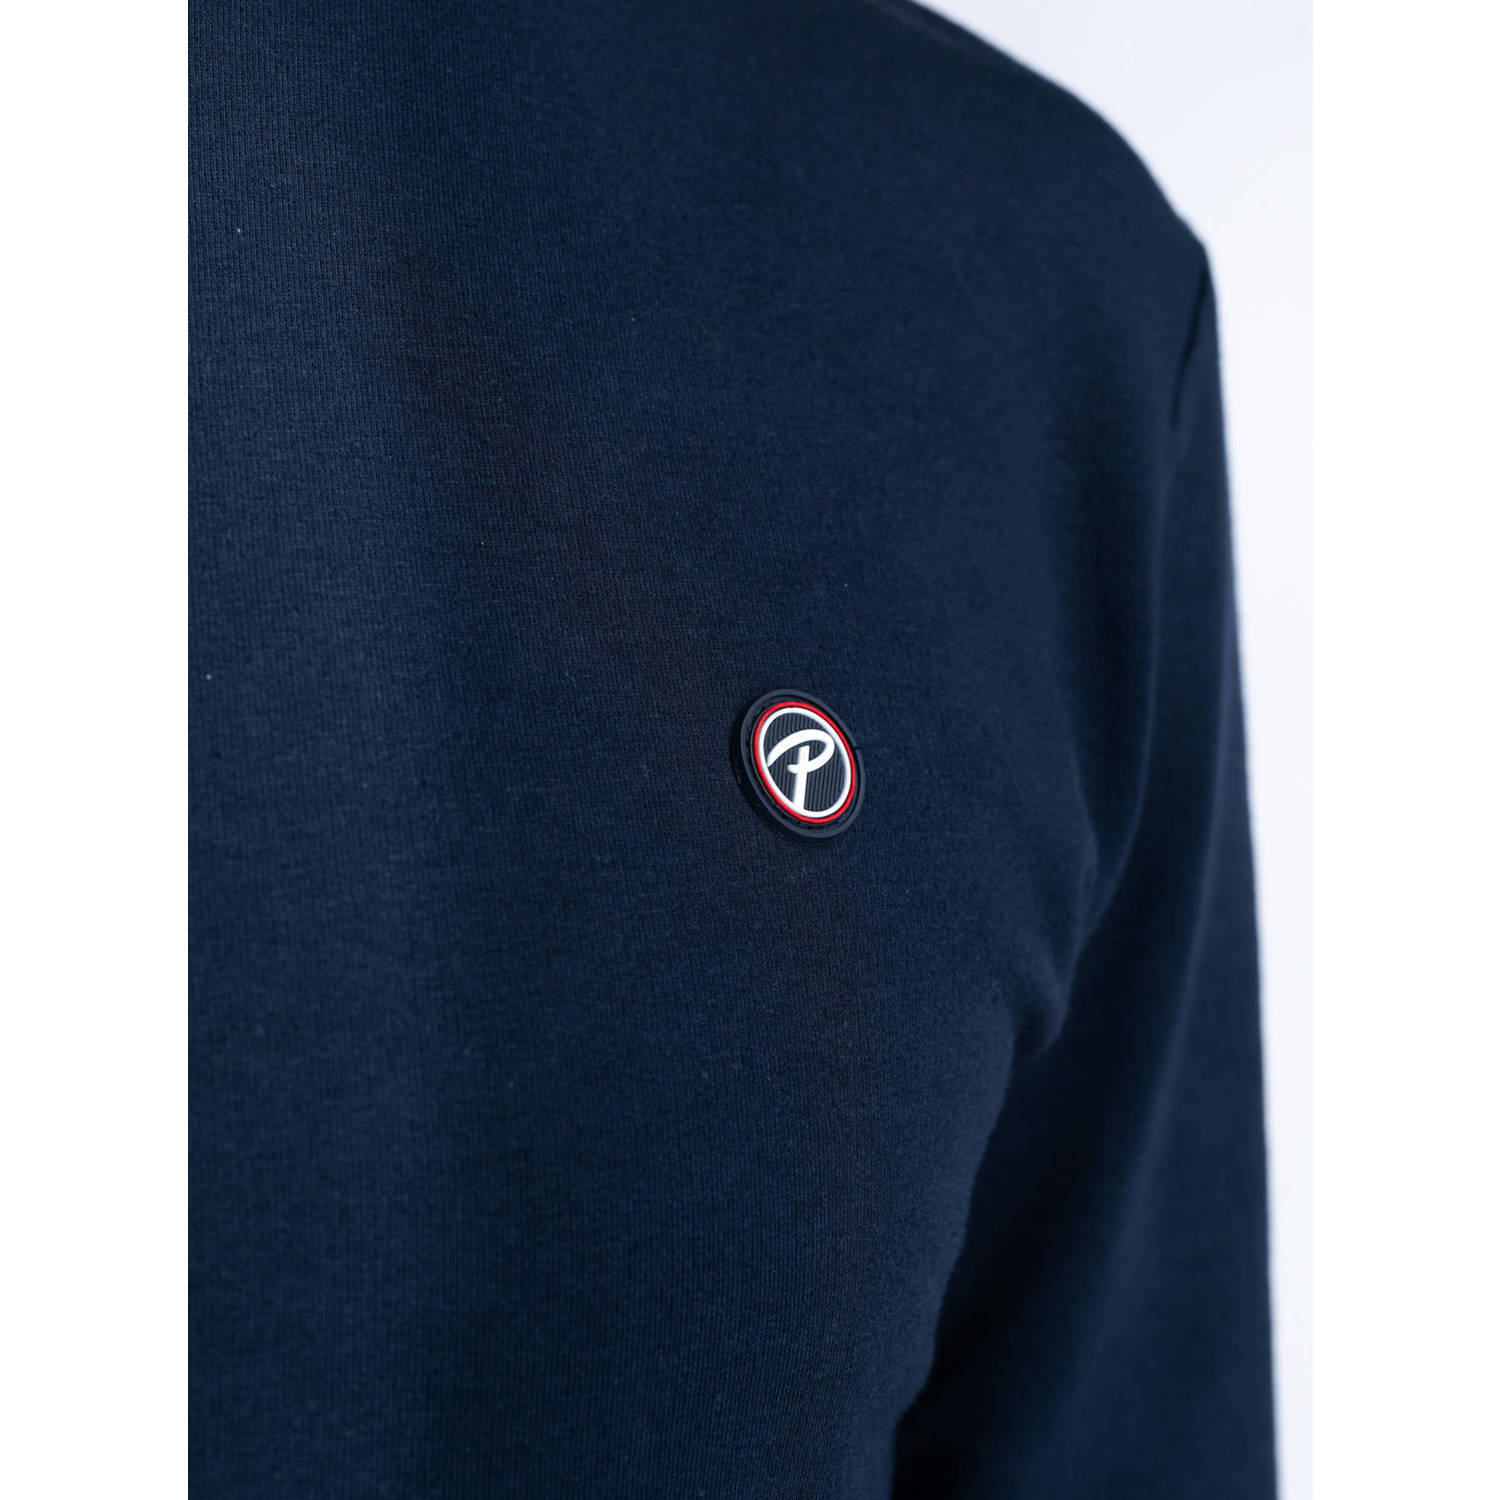 Petrol Industries sweater Cabana met logo navy blue